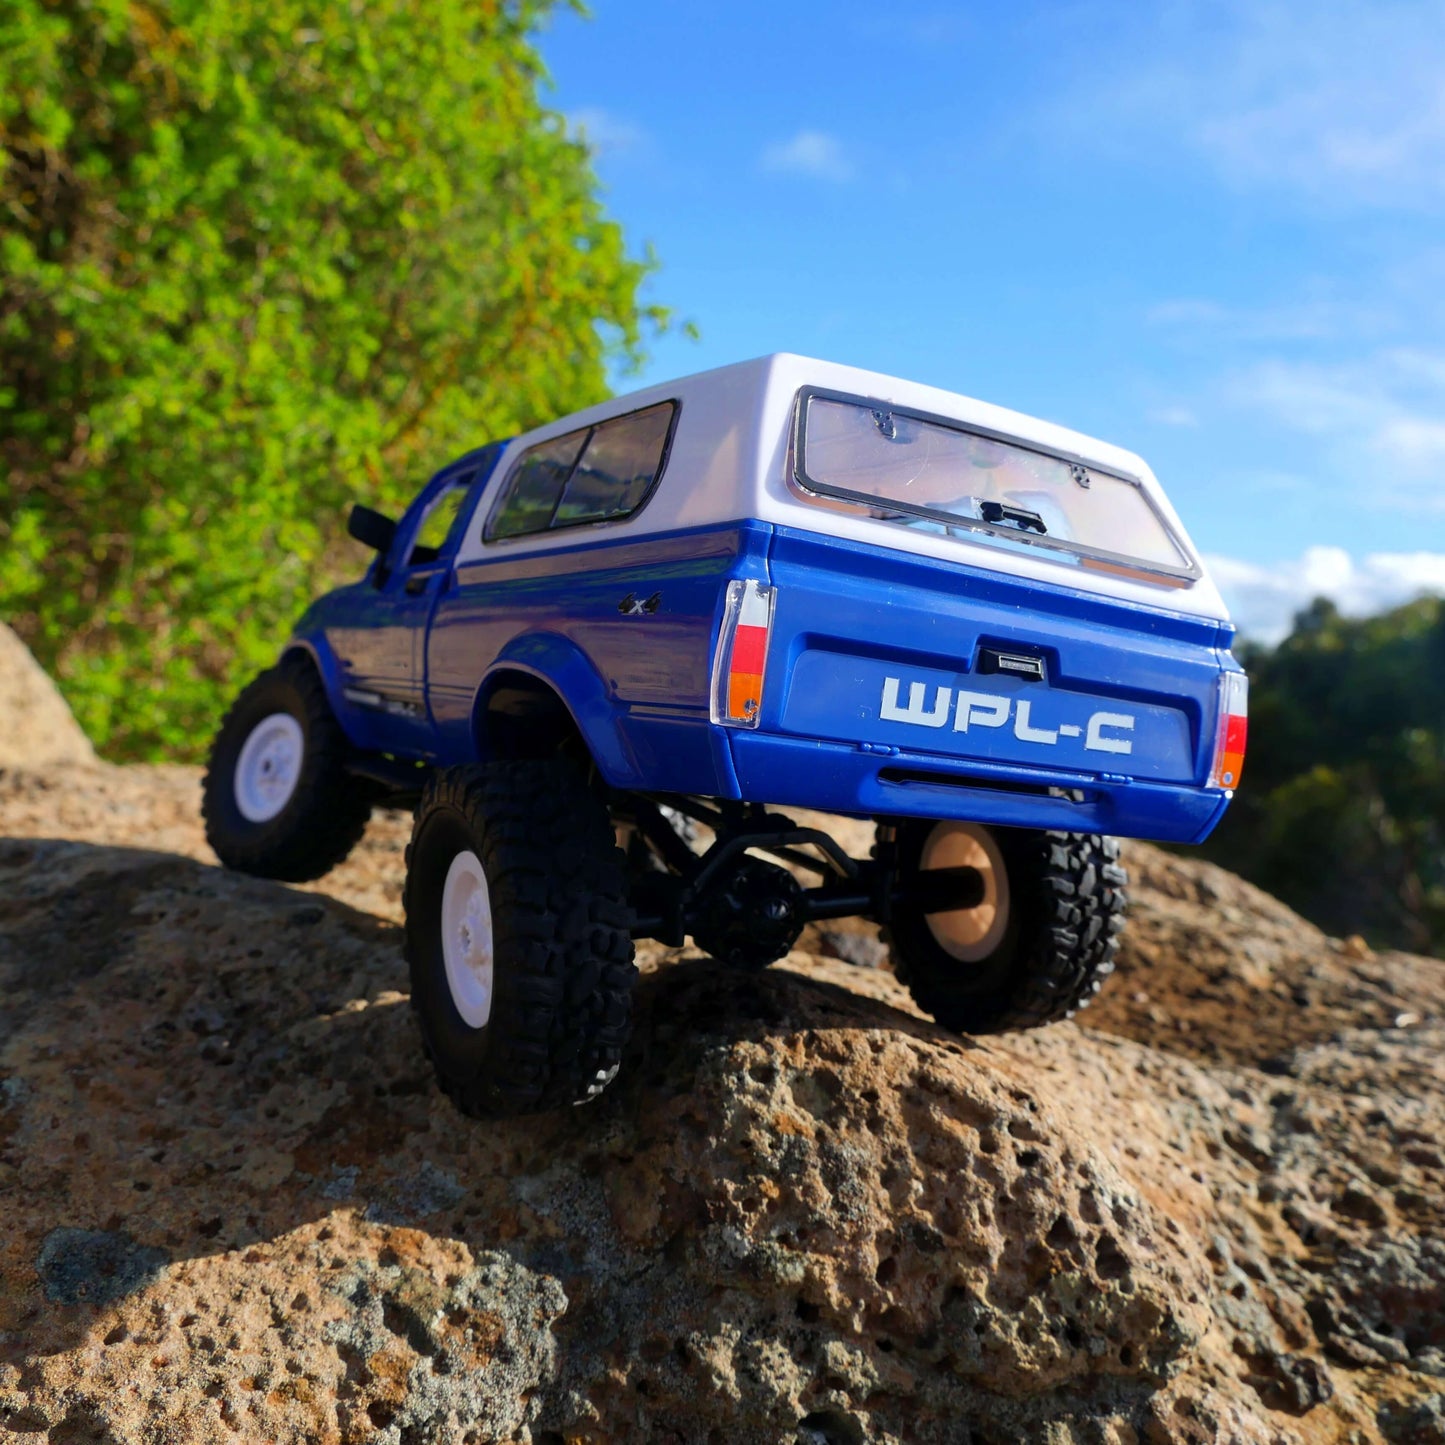 WPL C24 1:16 RC 4WD Rock Crawler